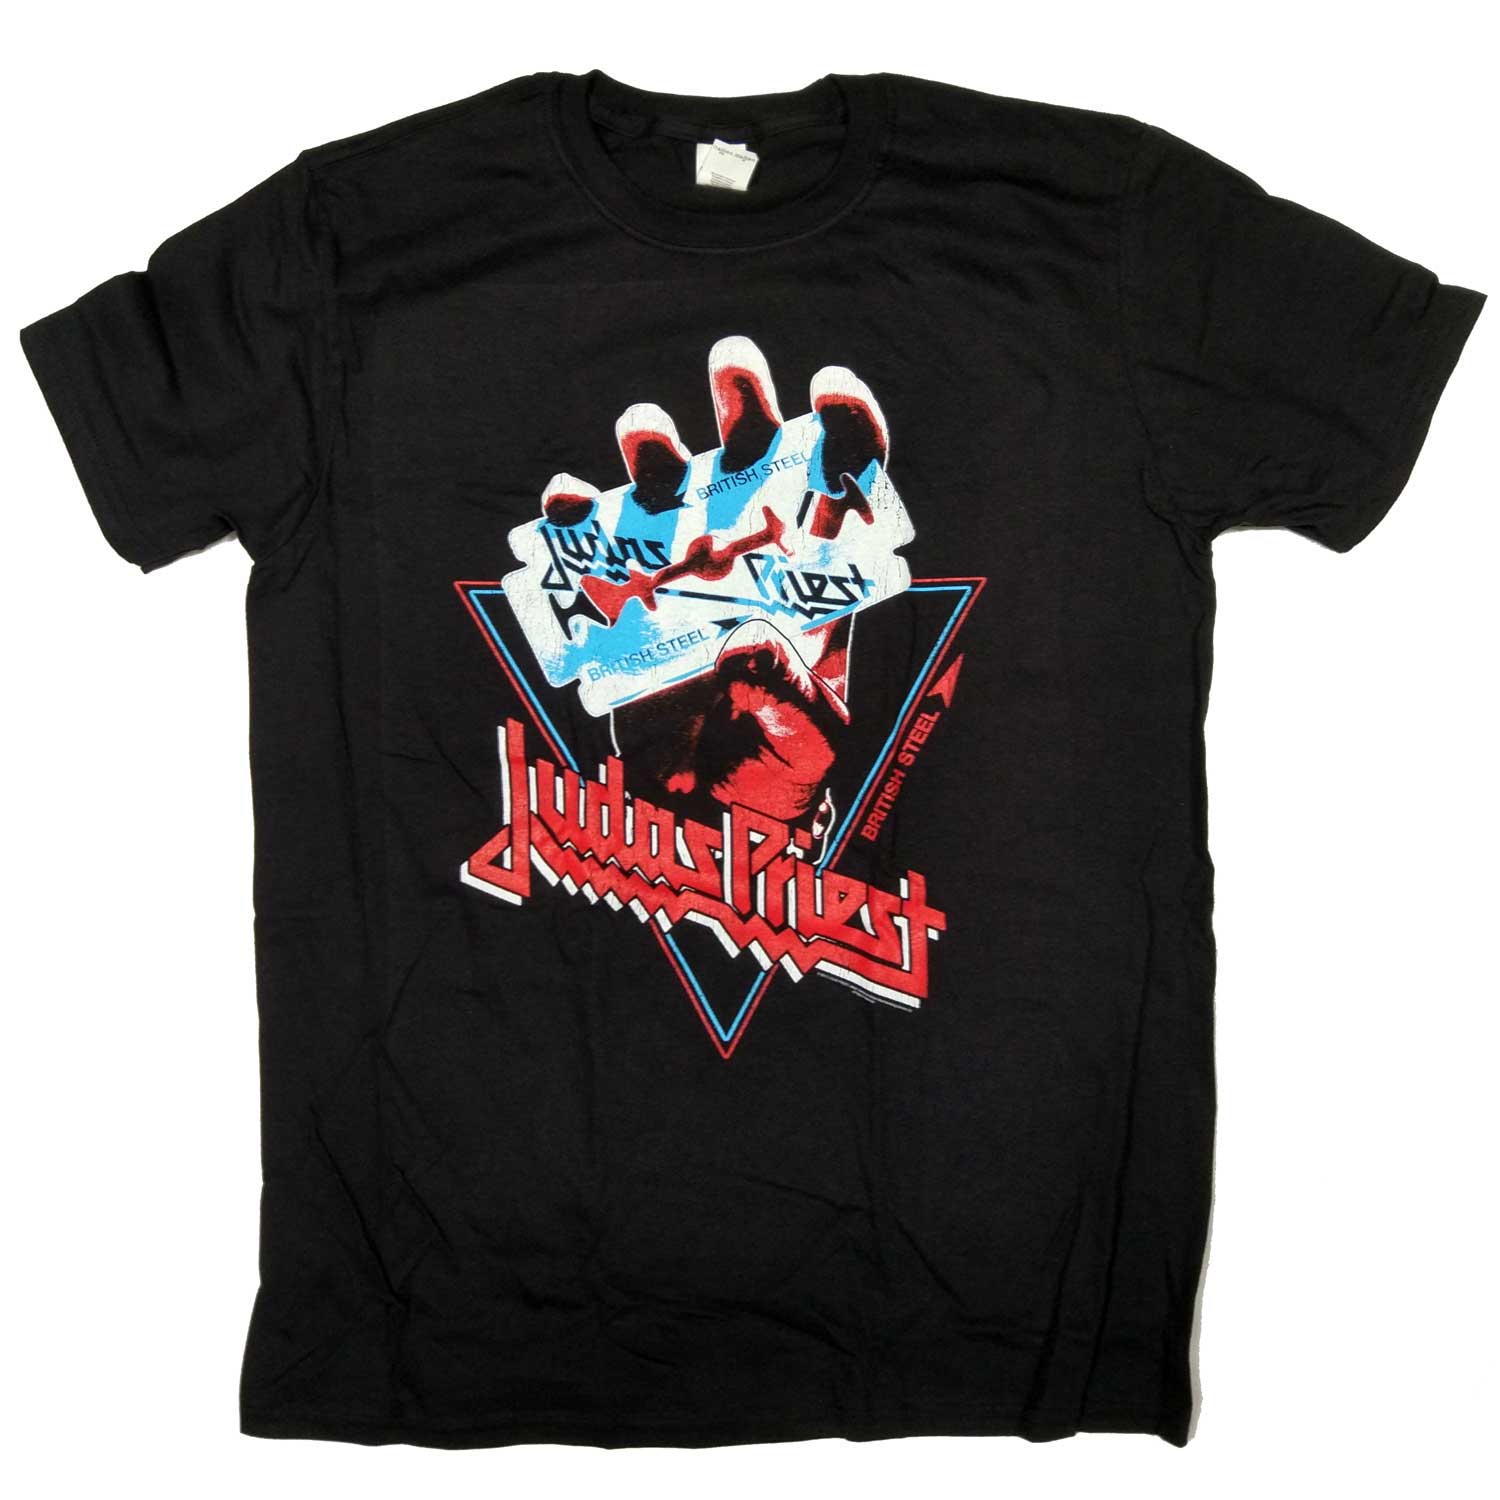 Judas Priest T Shirt - British Steel Retro Triangle Design 100% Official